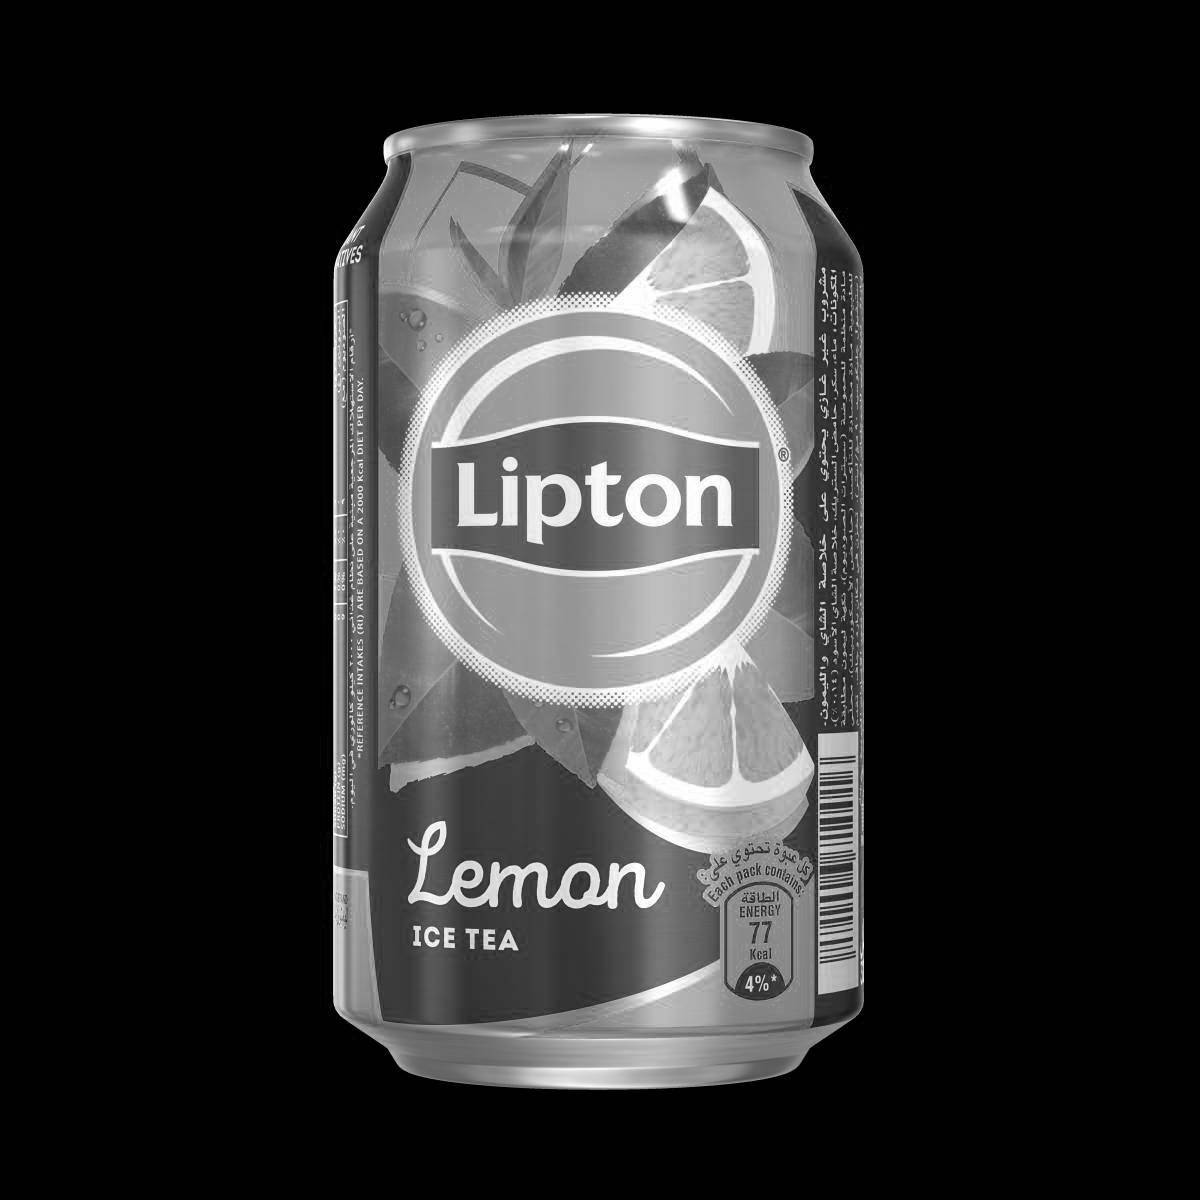 Lipton #3